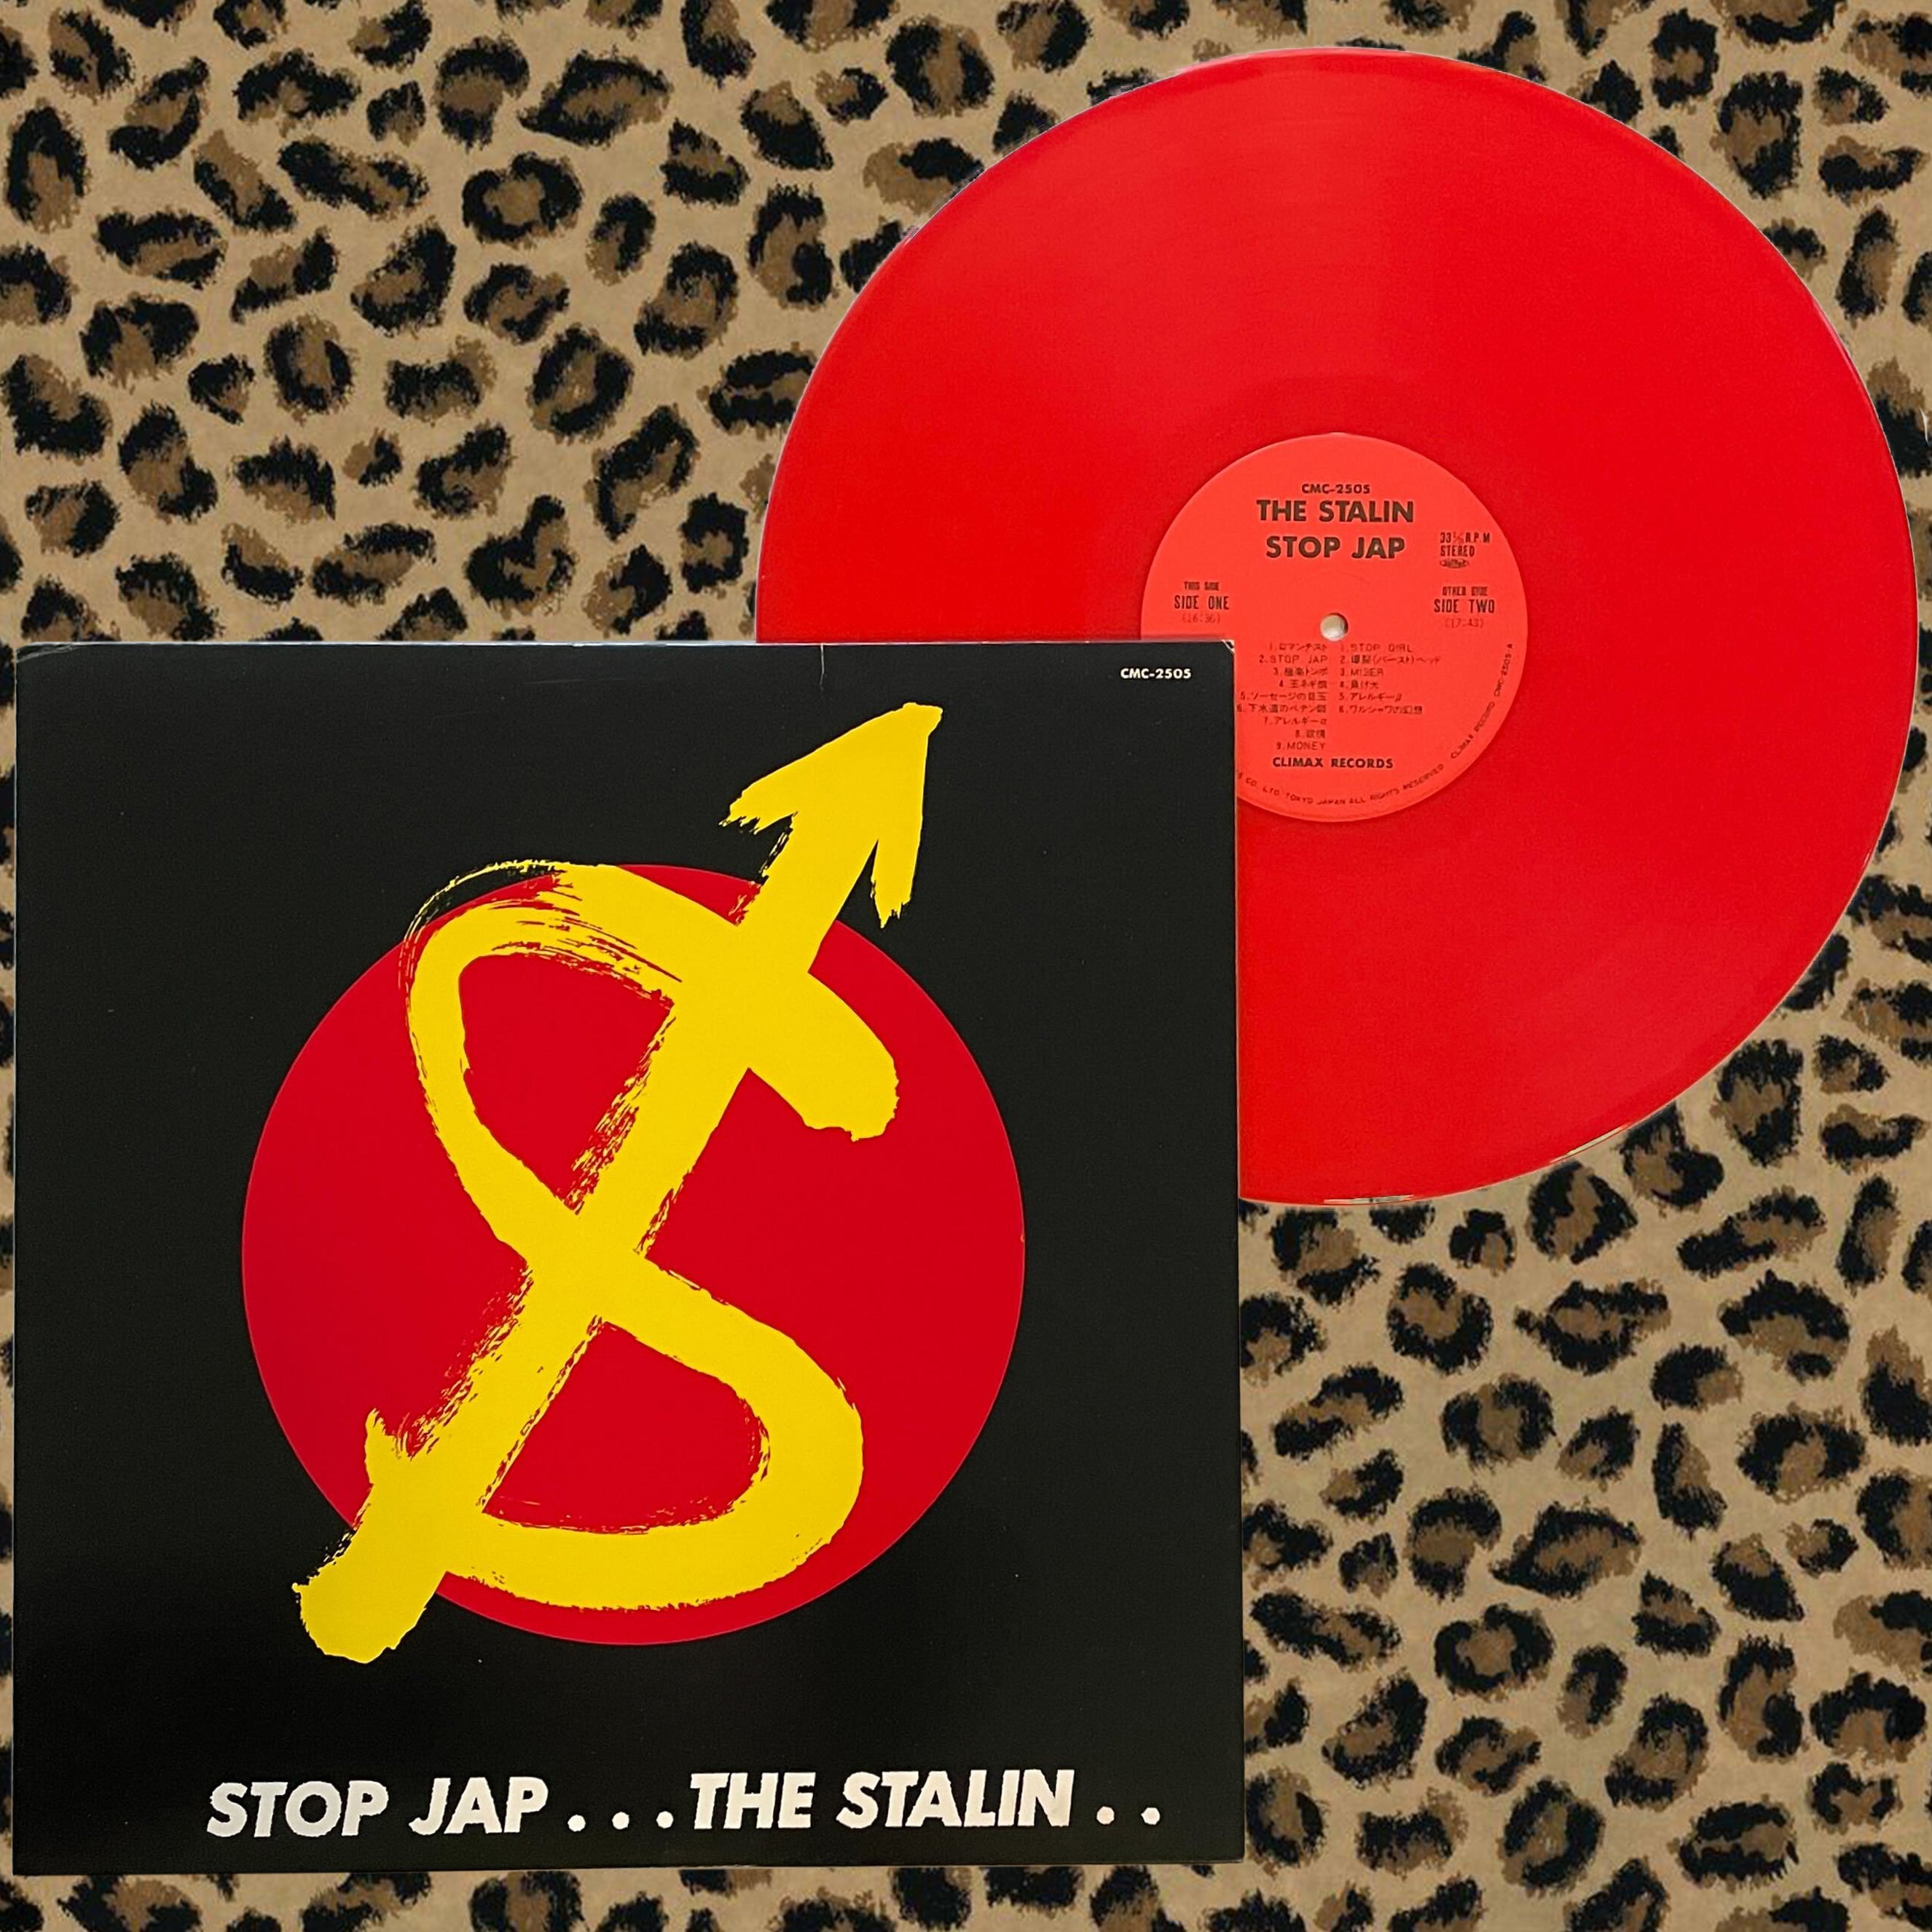 The Stalin: Stop Jap 12